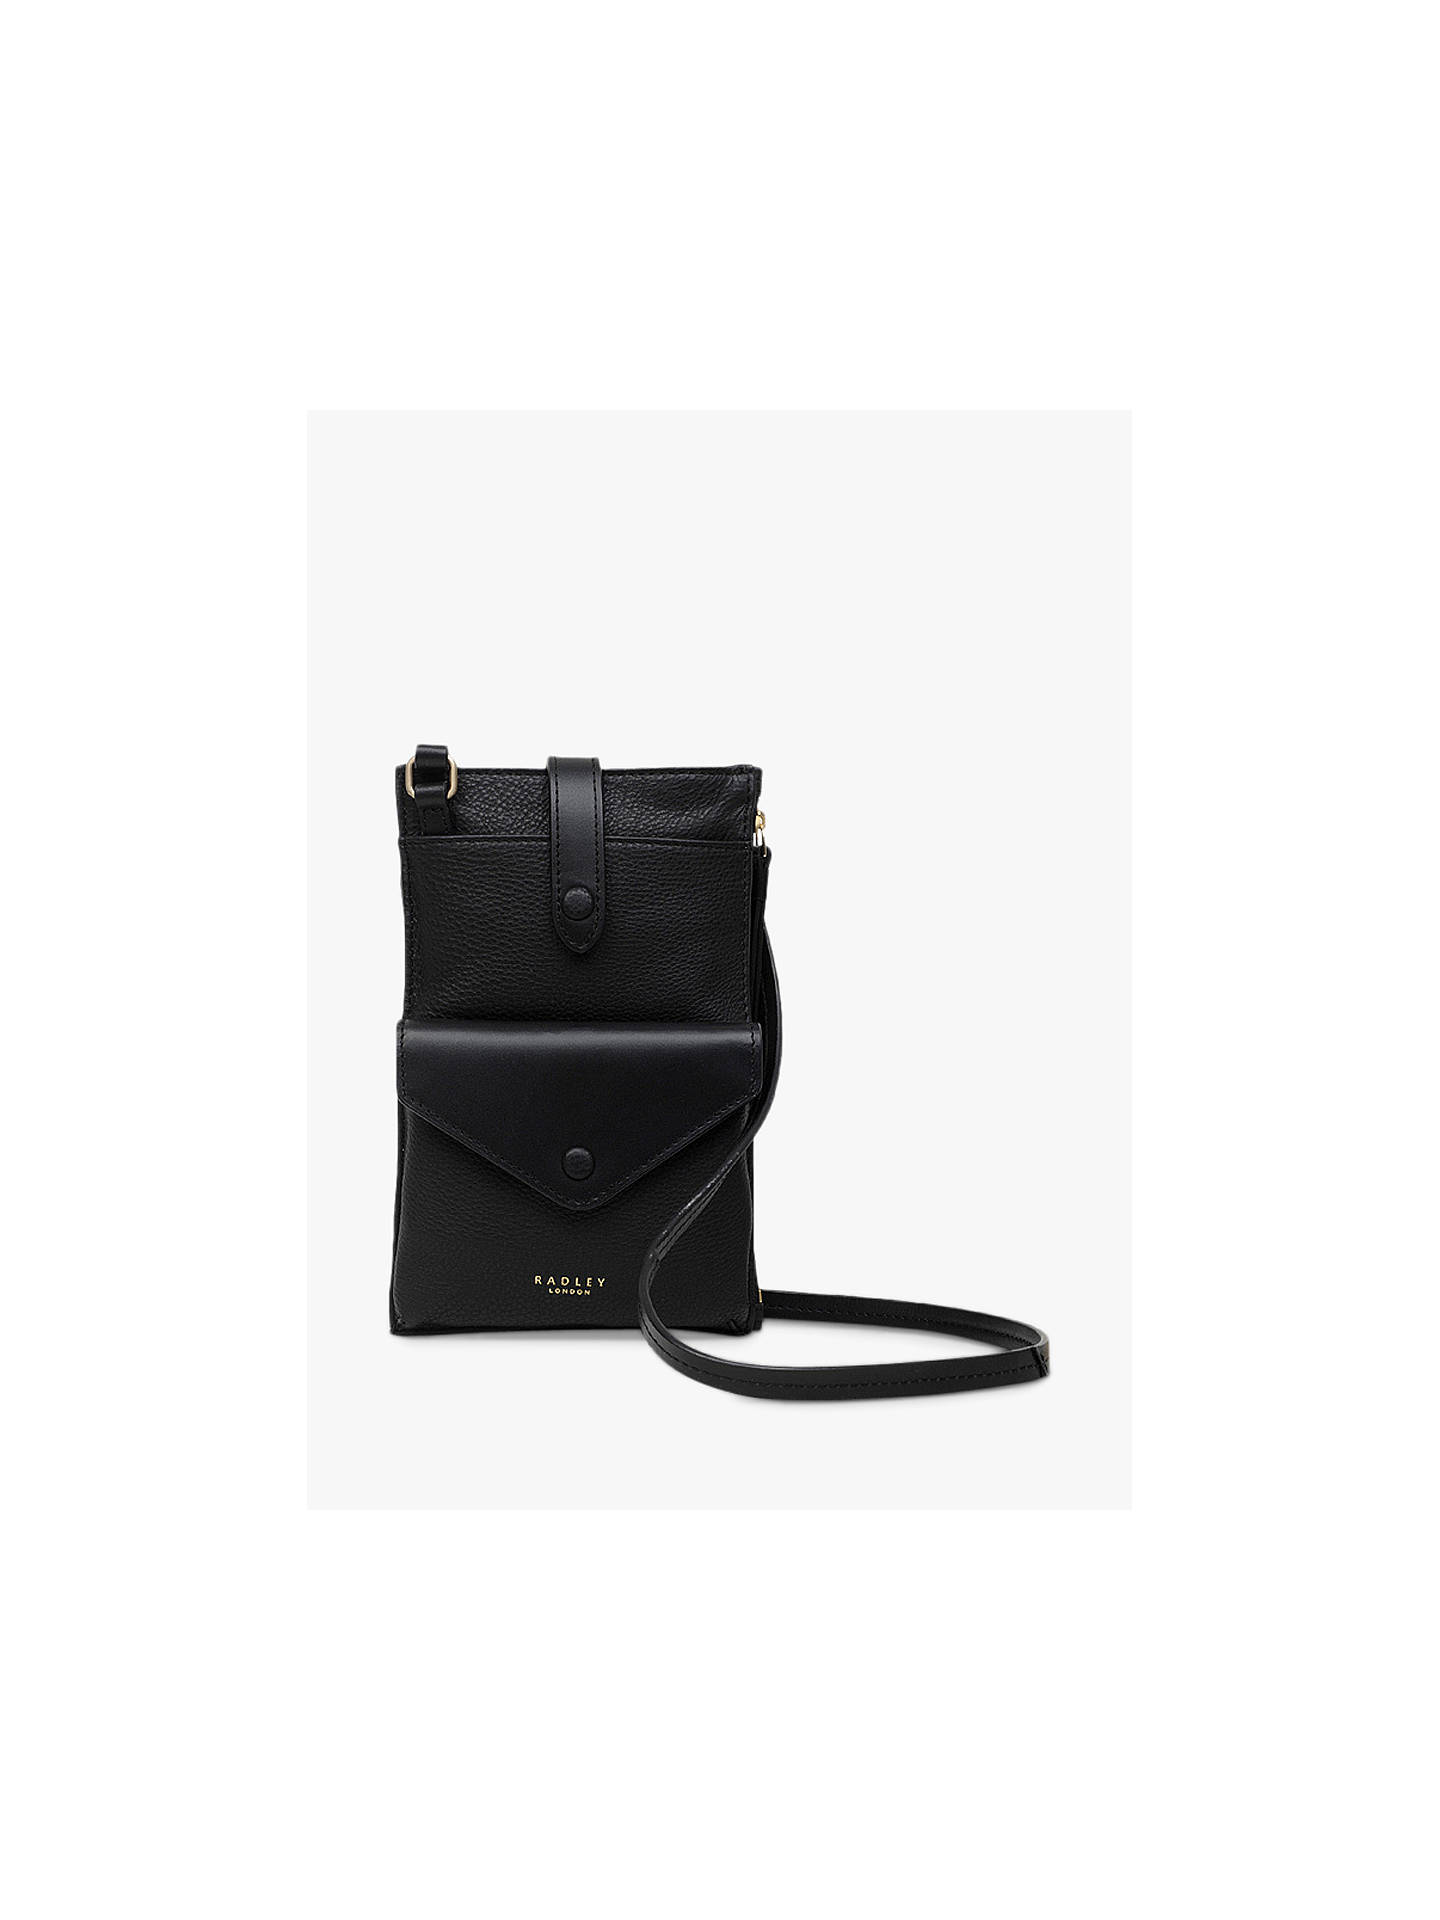 Radley Wilton Way Medium Leather Phone Cross Body Bag, Black at John Lewis & Partners